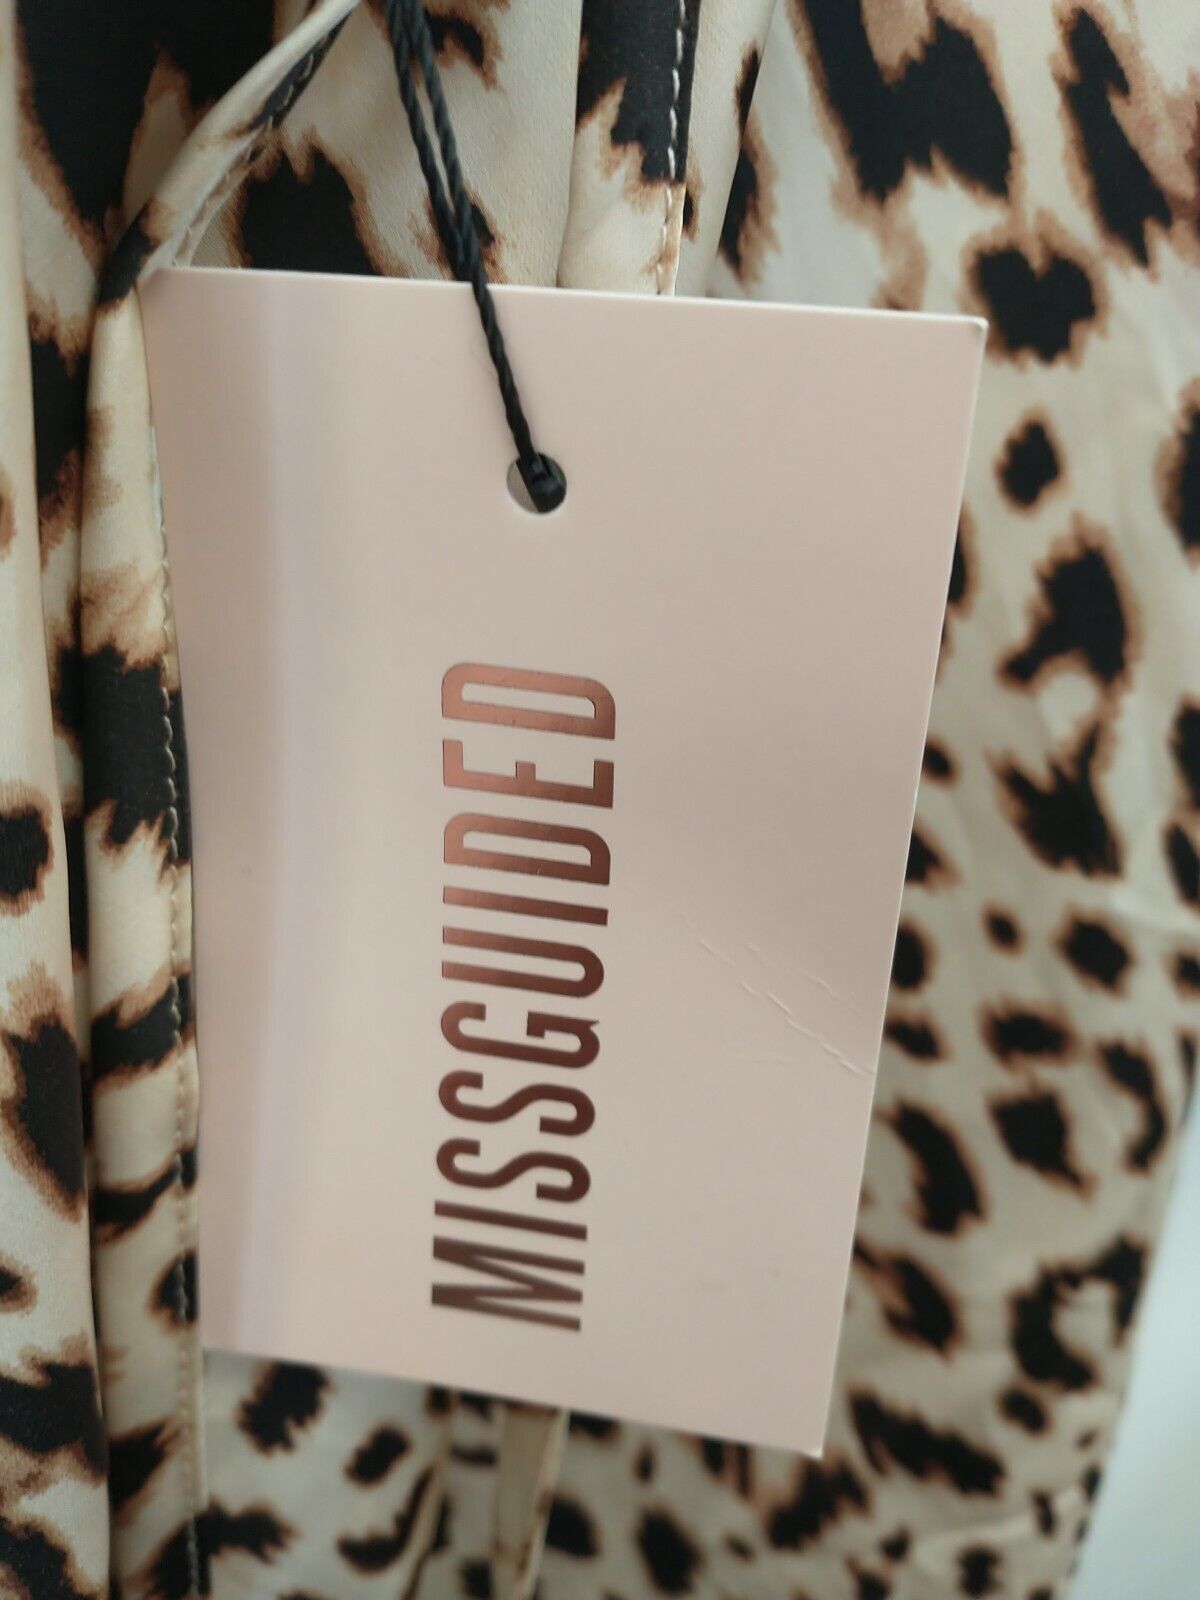 Missguided Cowl Cami Satin Dress Leopard Print. UK 12 **** Ref V30